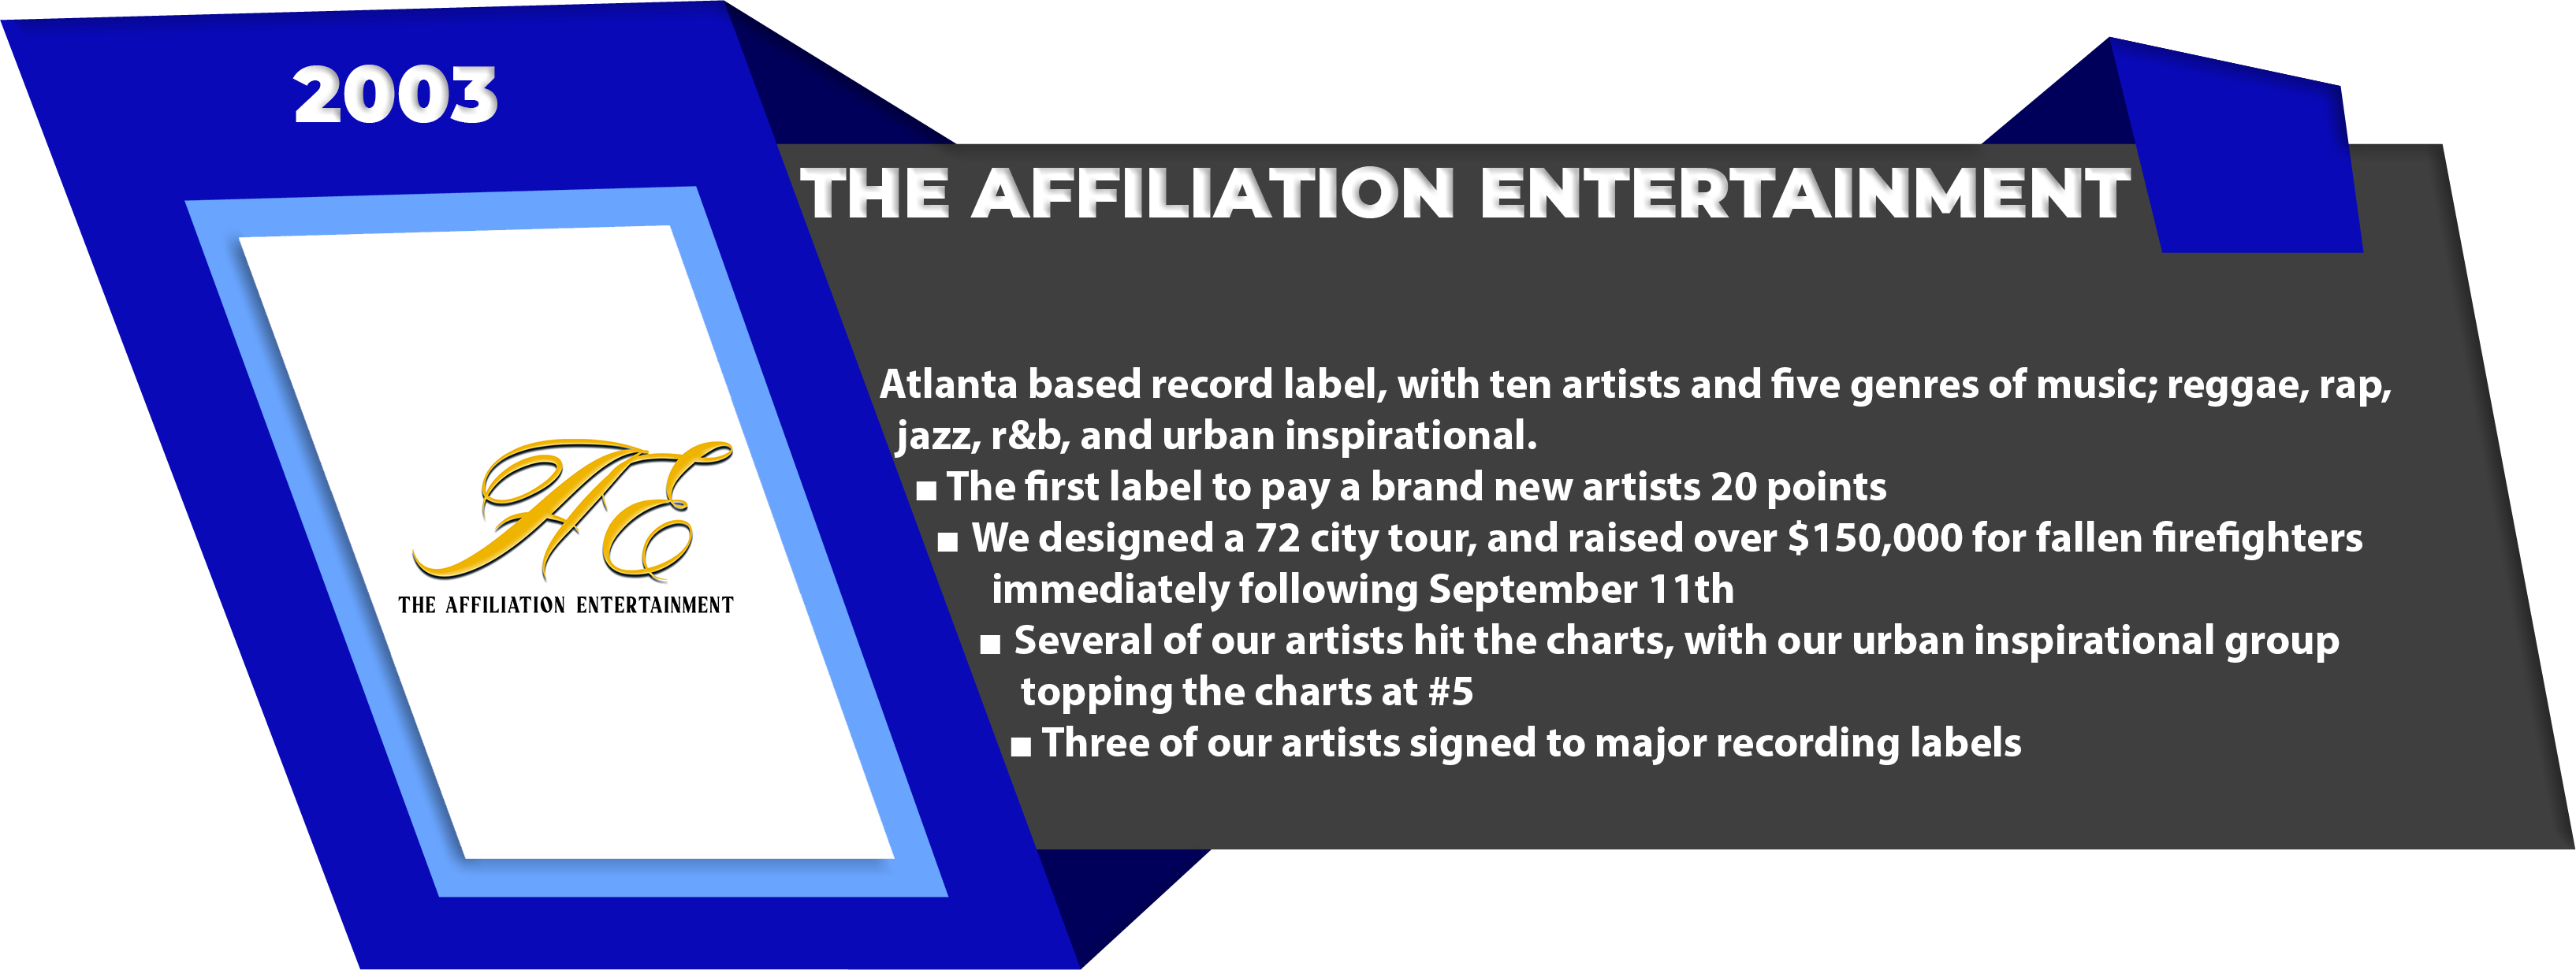 The-Affiliation-Entertainment-2003-2008-1